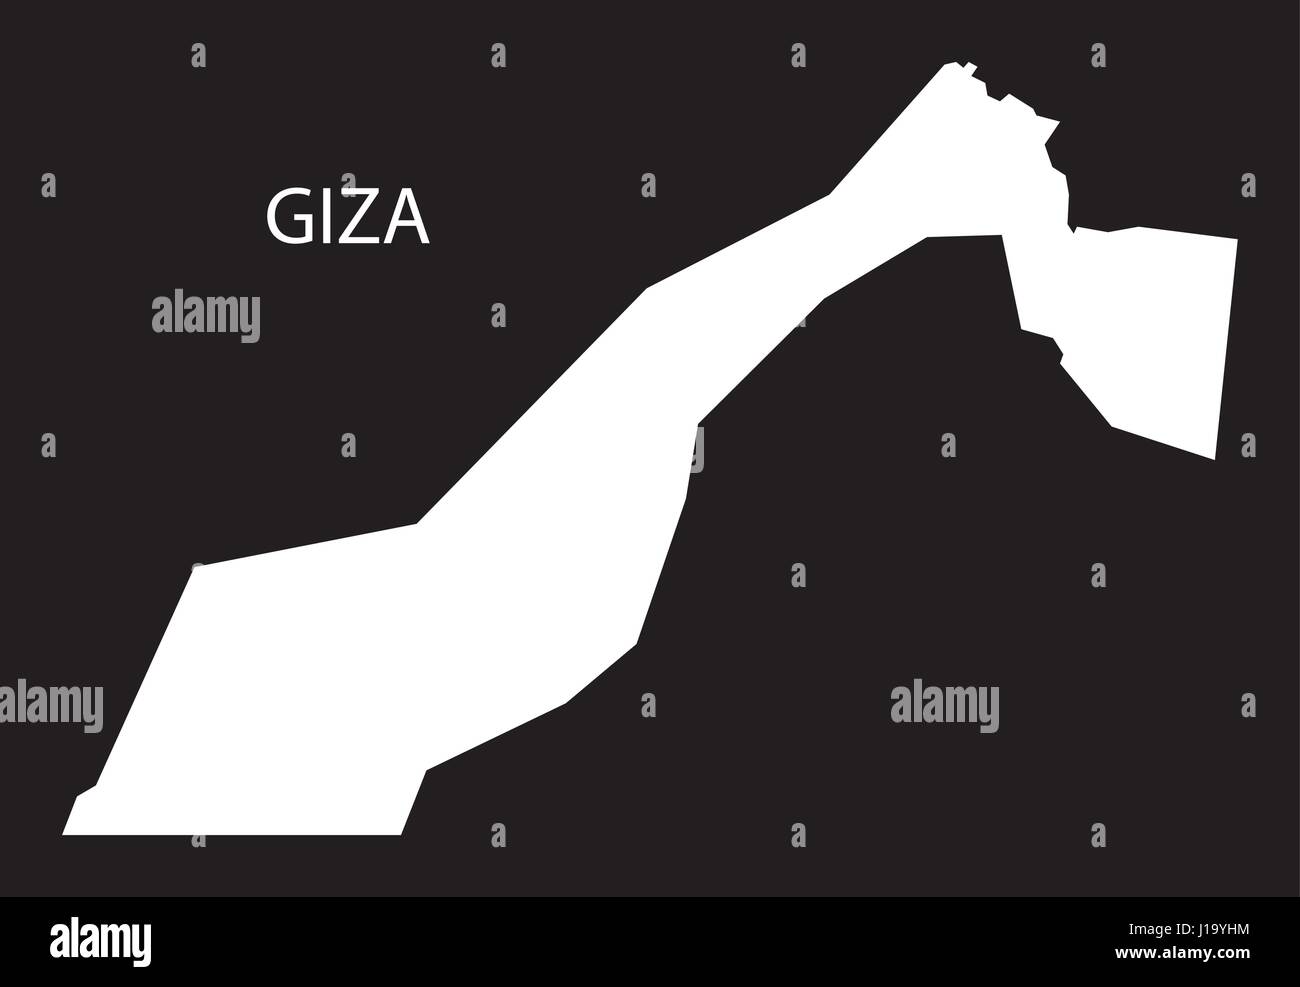 Gizeh Ägypten Karte schwarz invertiert Silhouette Abbildung Stock Vektor